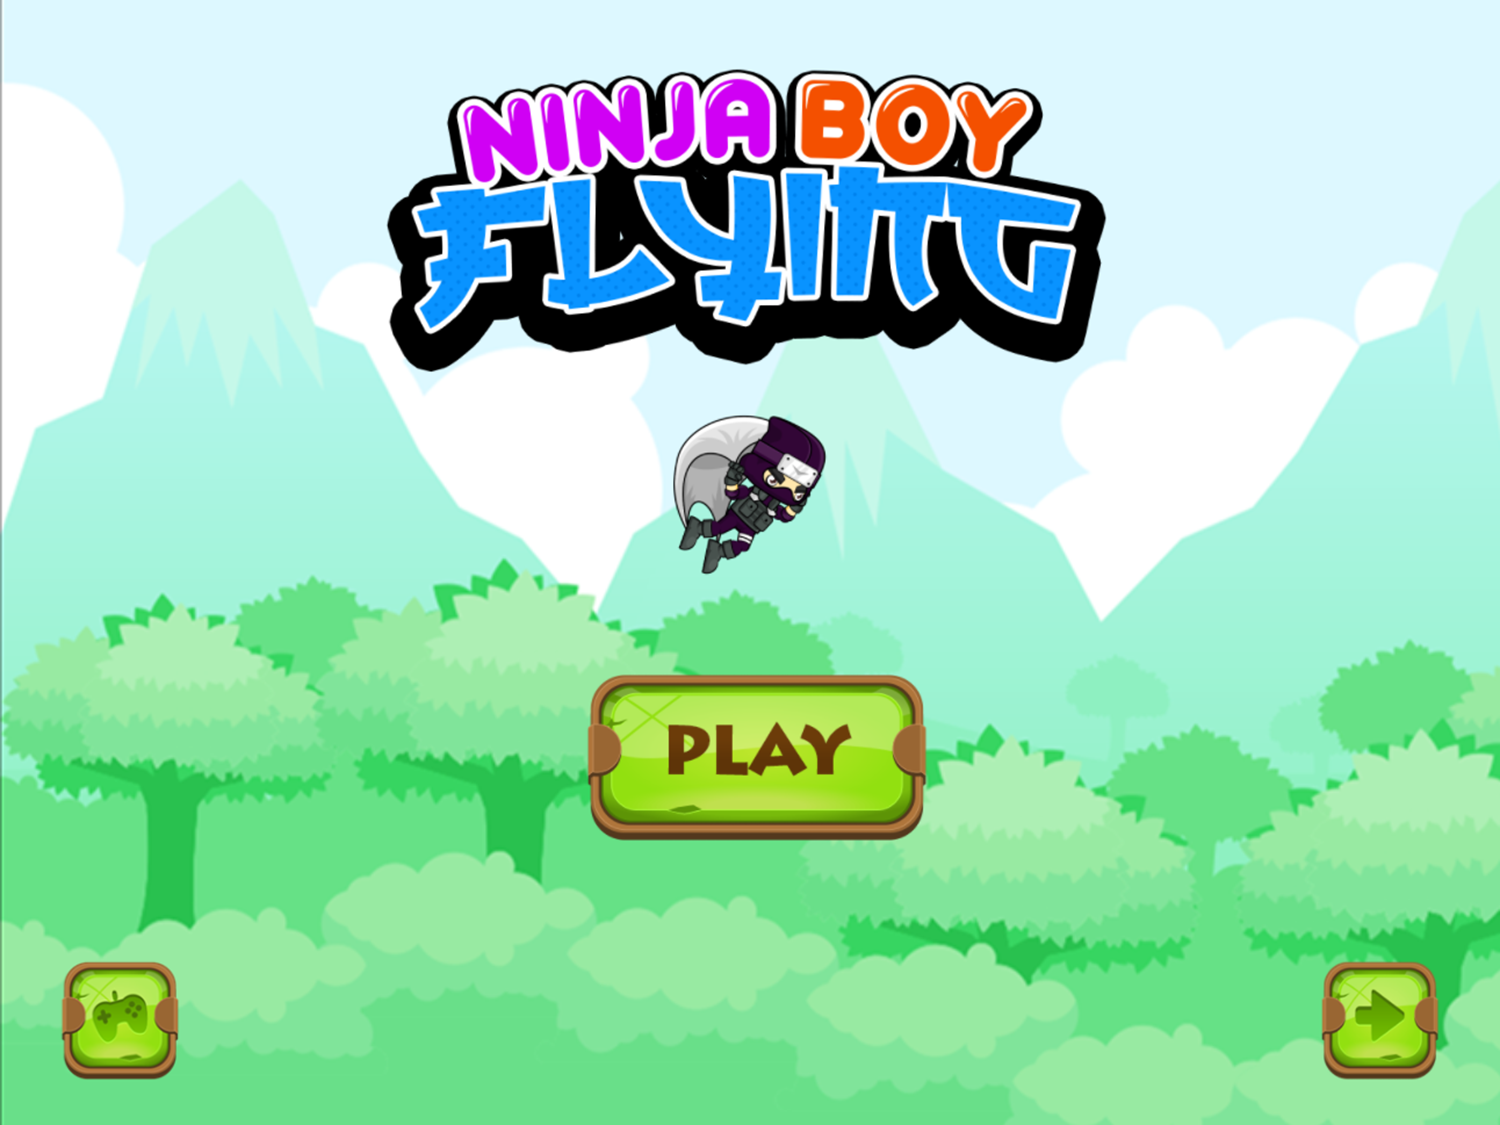 Ninja Boy Flying Game Welcome Screen Screenshot.